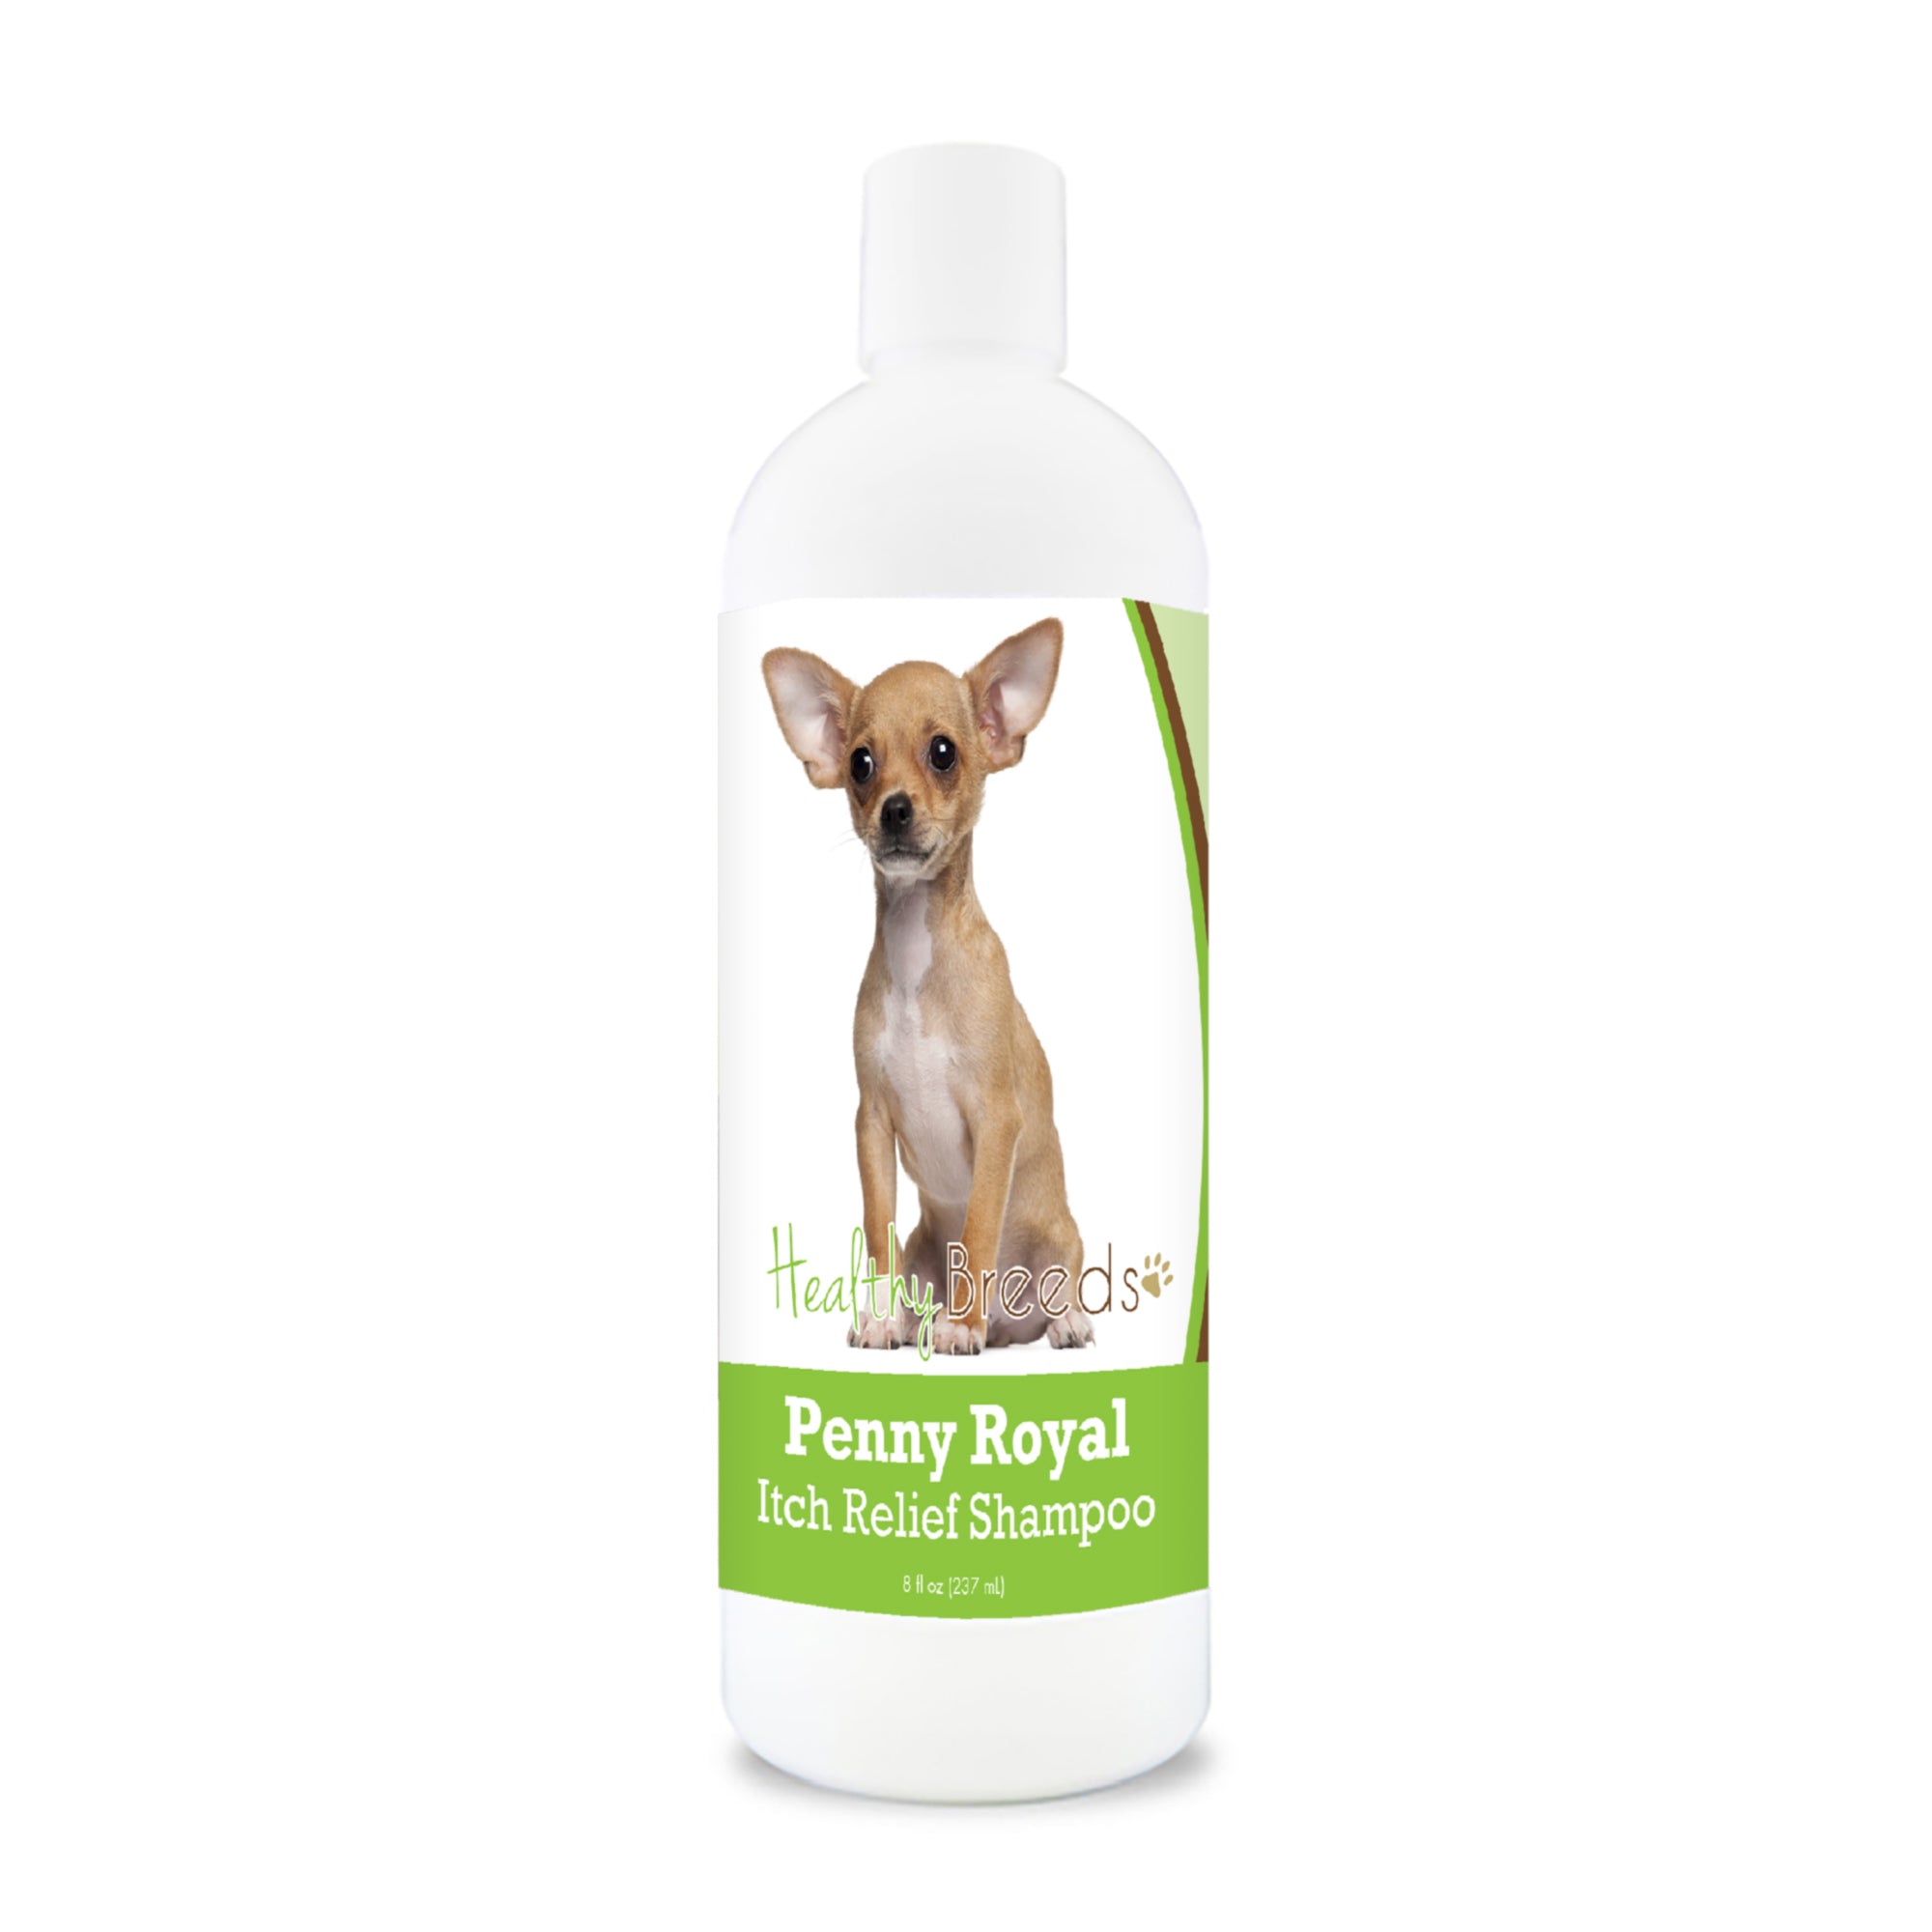 Chihuahua Penny Royal Itch Relief Shampoo 8 oz